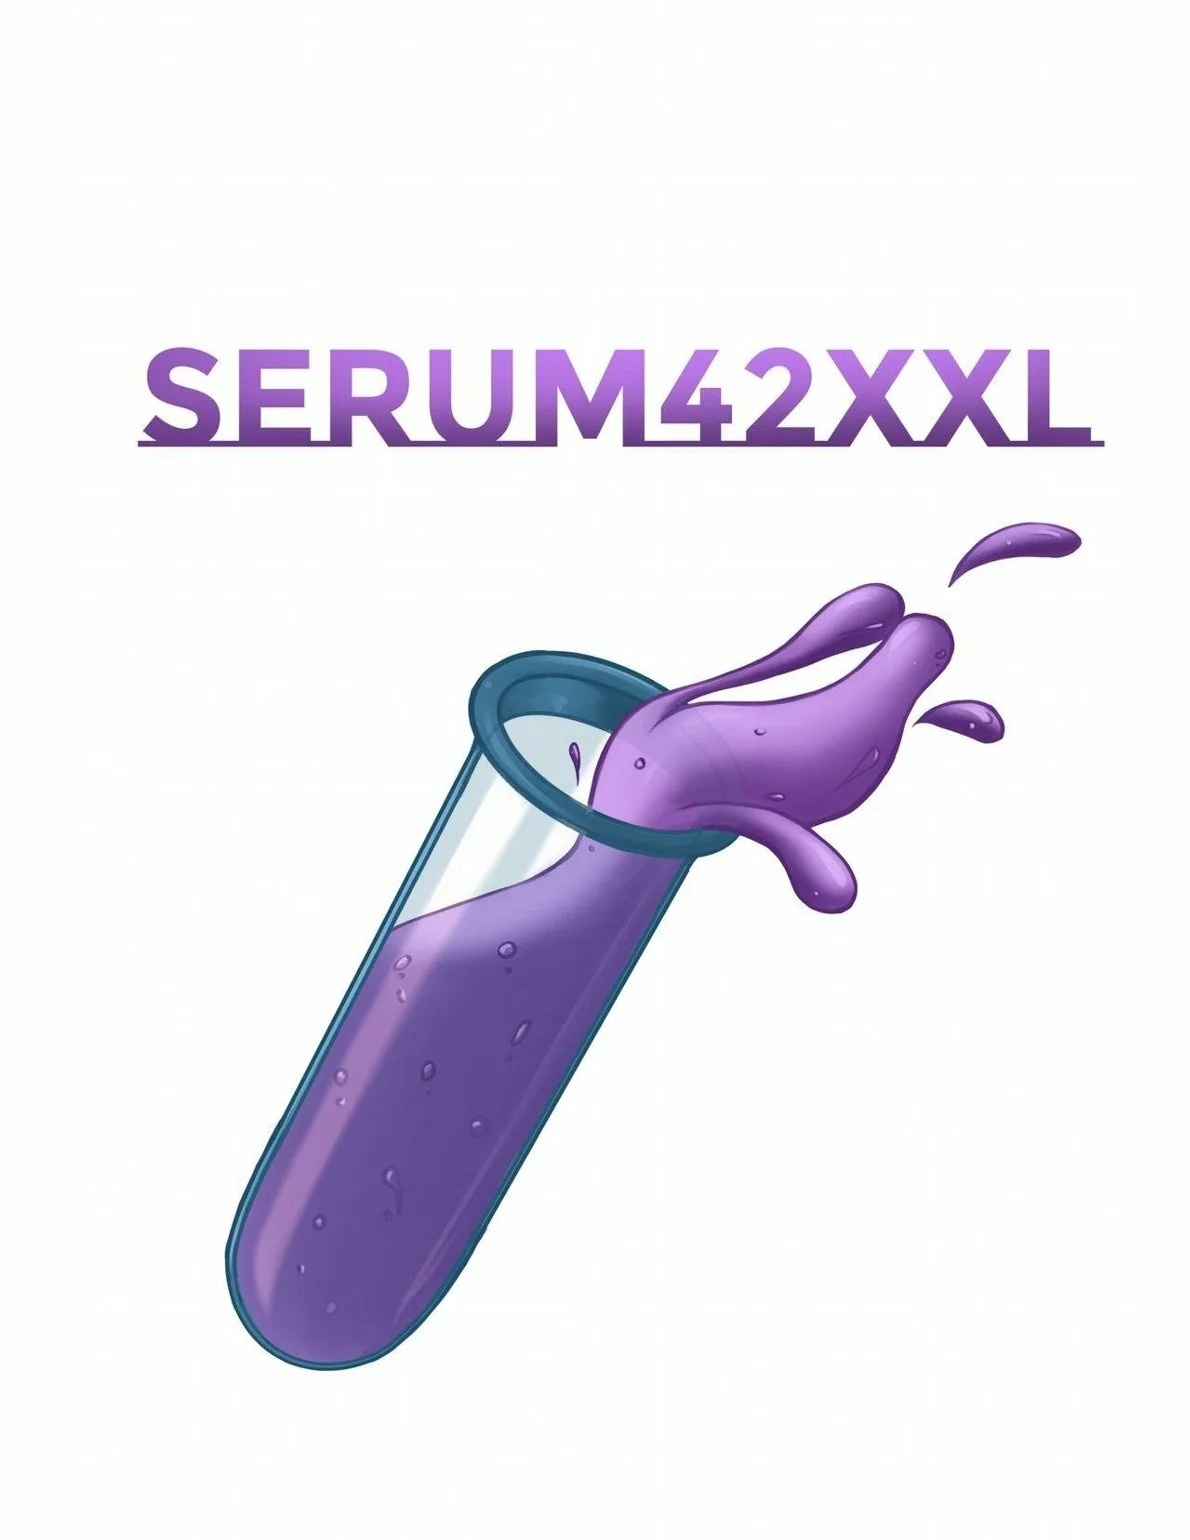 Serum42XXL (completo) - 75